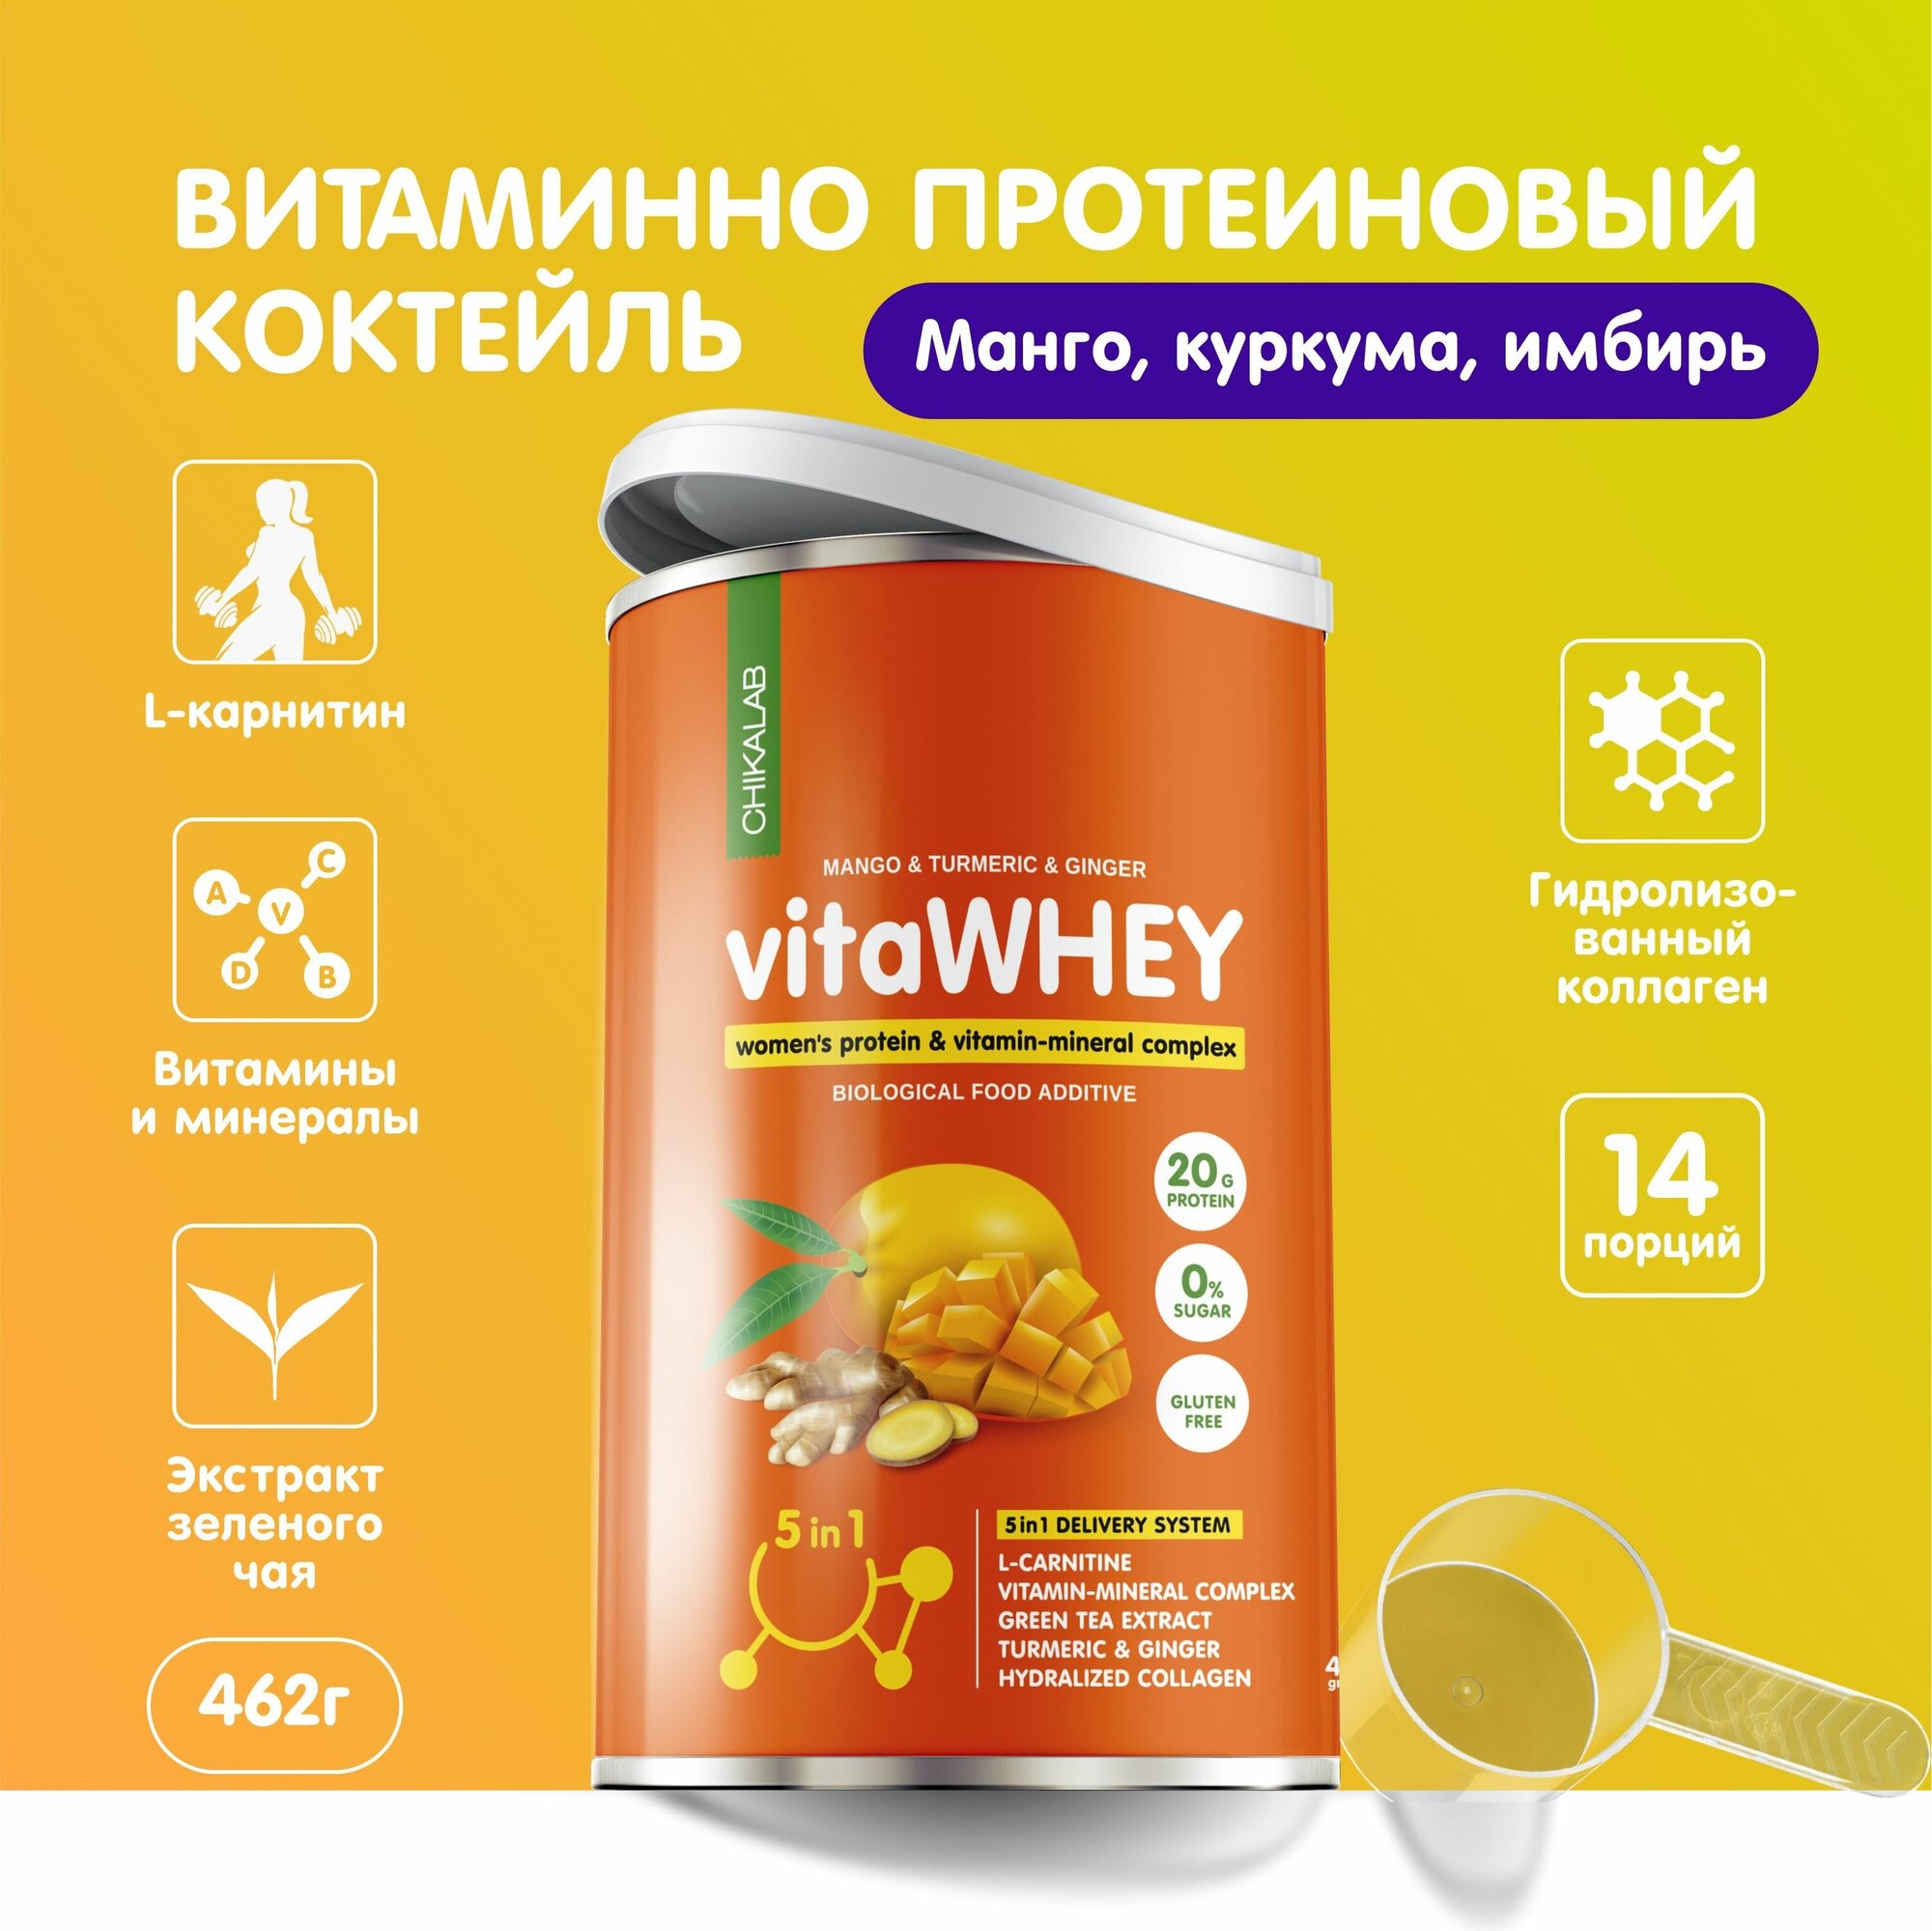 Коктейль витаминно-минеральный Манго куркума и имбирь VitaWhey Mango turmeric & ginger Chikalab 462 гр.